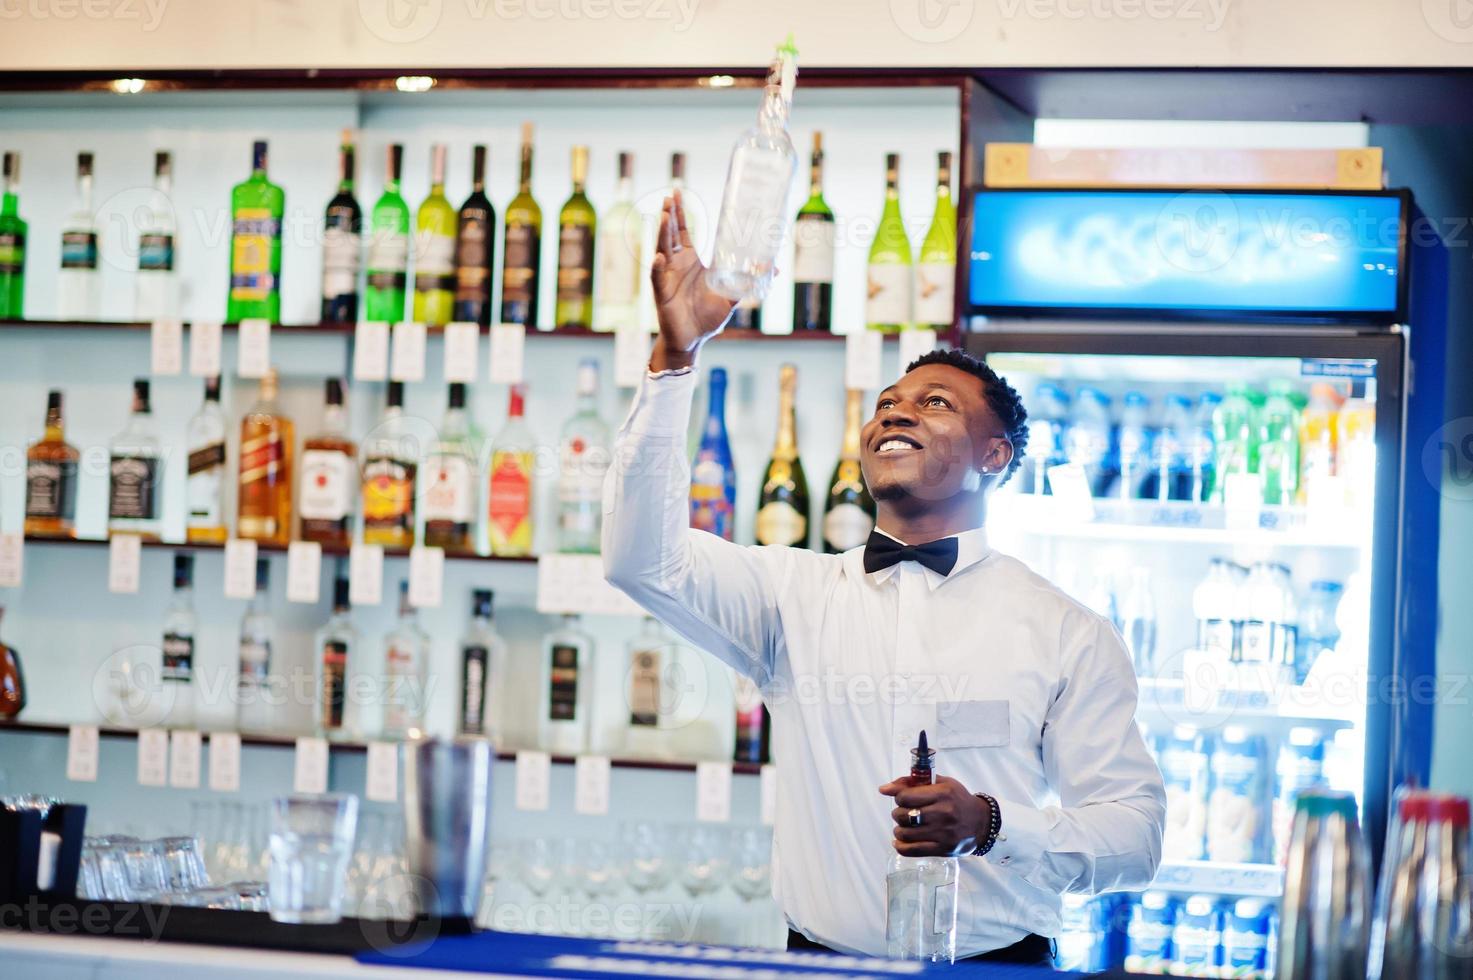 bartender afroamericano en bar flair en acción, trabajando detrás del bar de cócteles. preparación de bebidas alcohólicas. foto